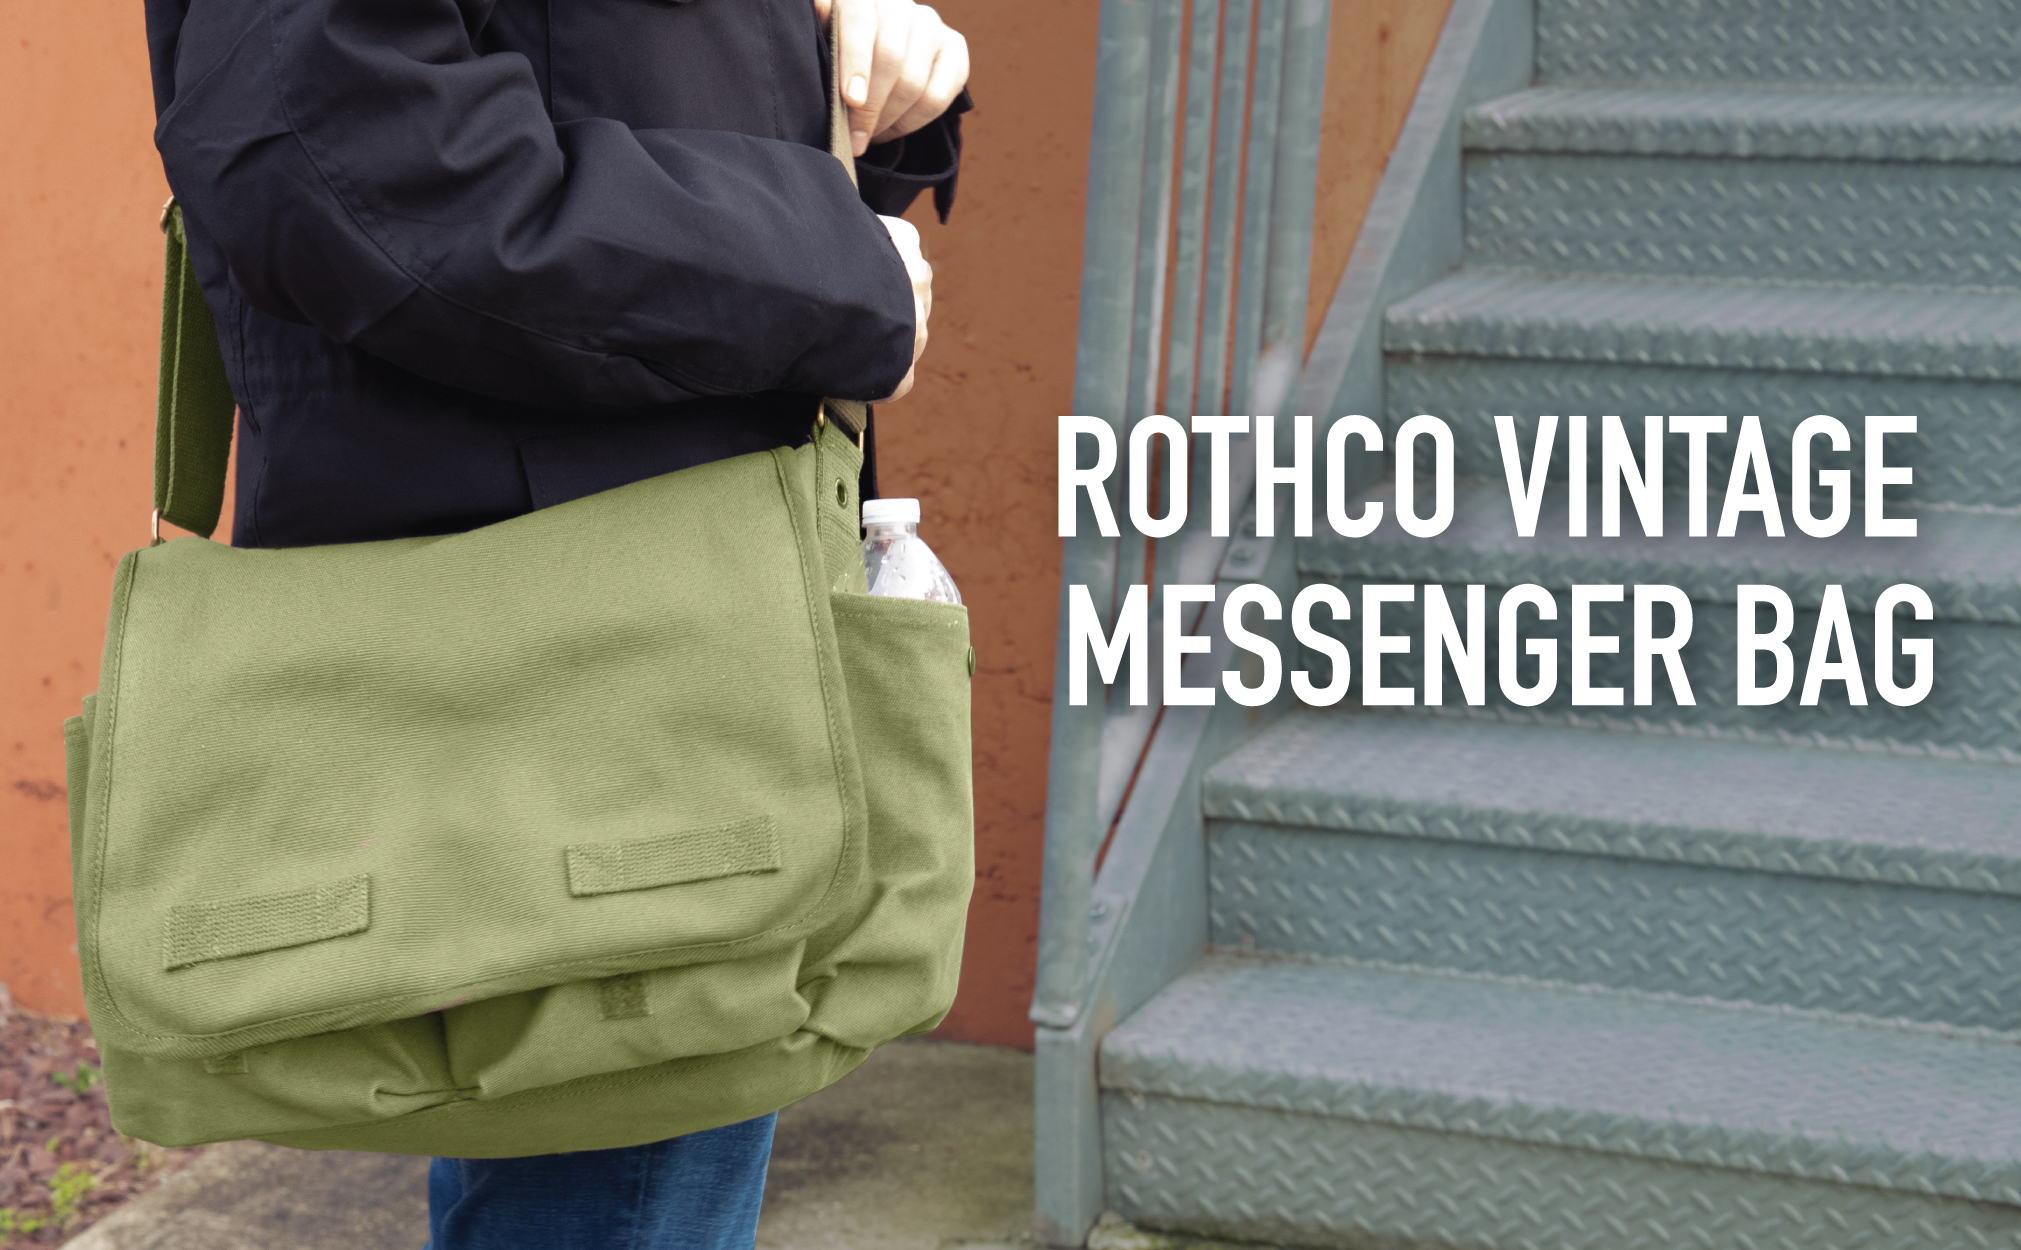 Rothco Classic Canvas Messenger Bag, Blue - image 3 of 3